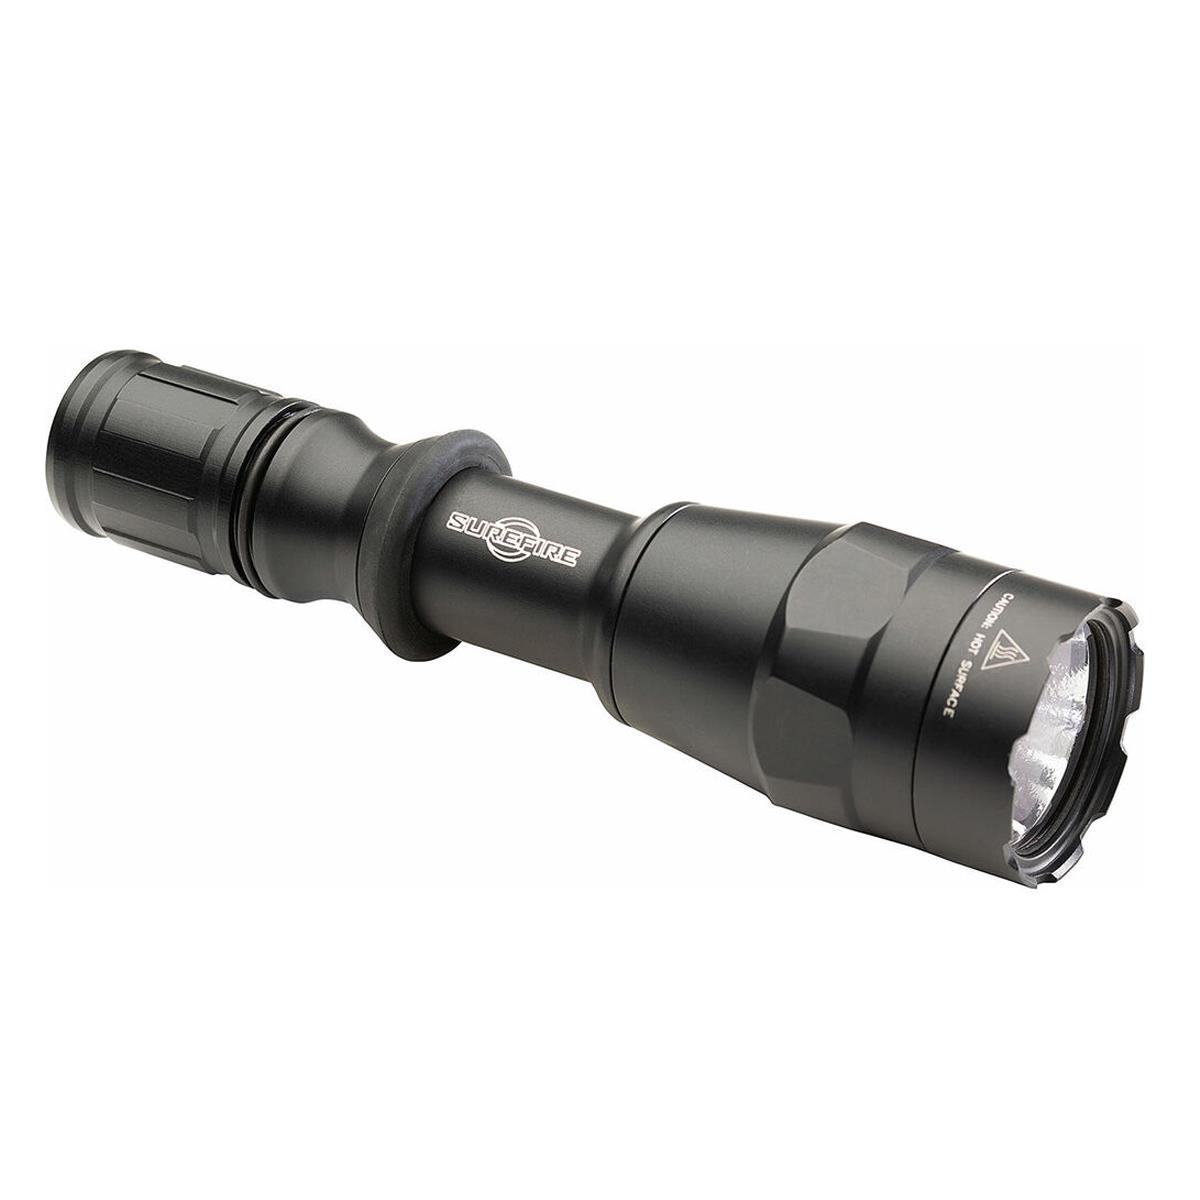 Dual-Fuel Tactical LED Flashlight - SureFire P1RZ-B-DFT